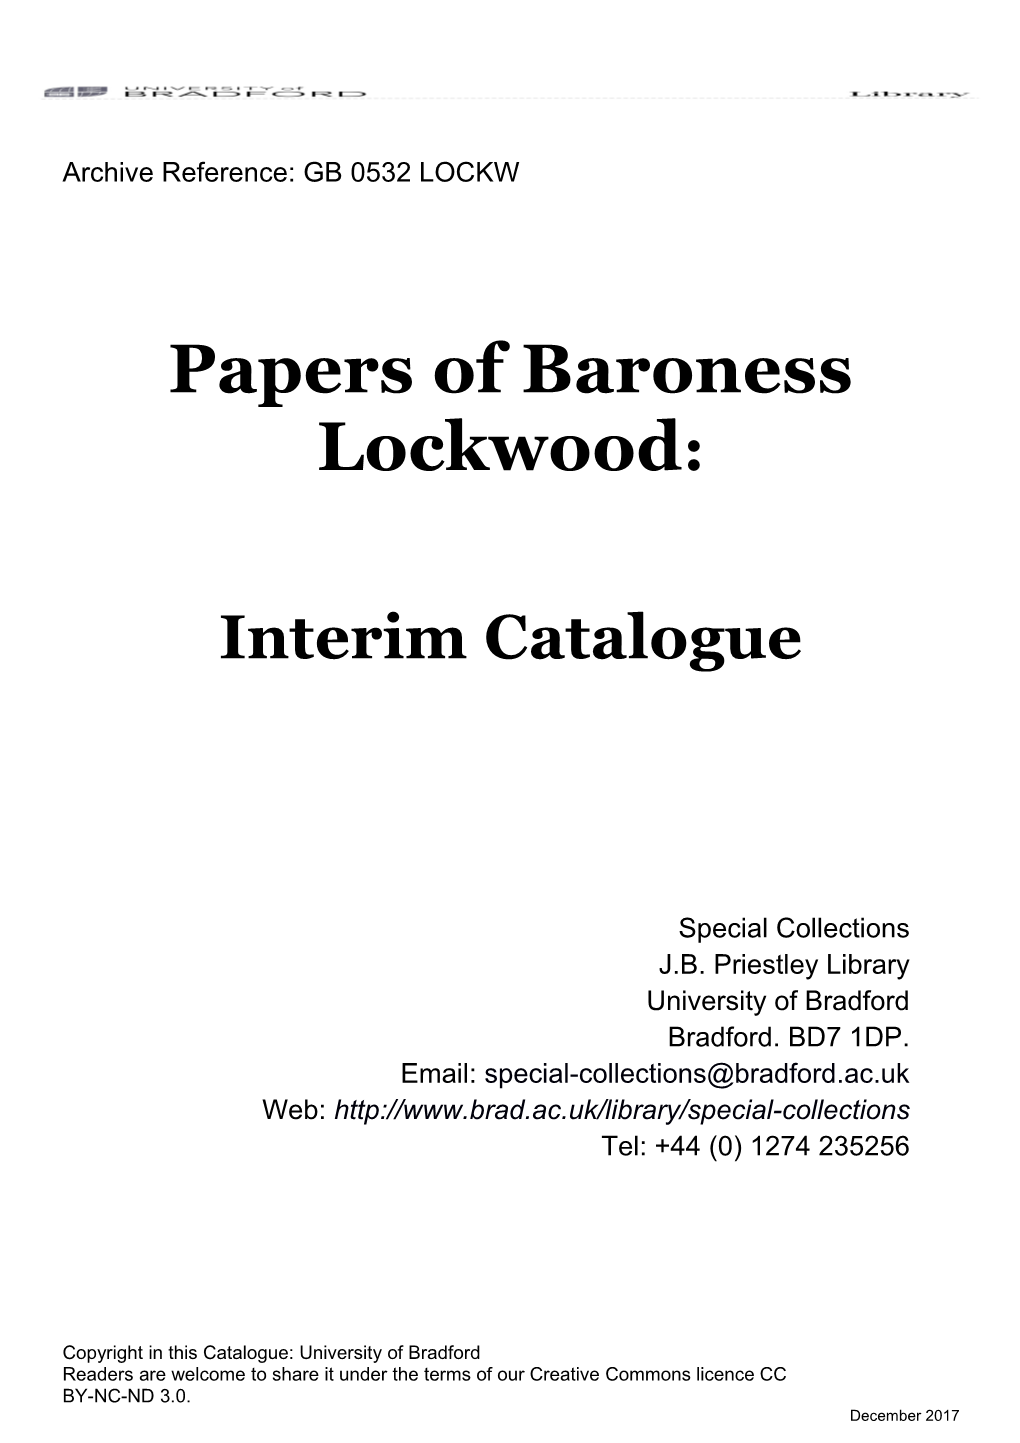 LOCKW Papers of Baroness Lockwood Interim Catalogue Dec 2017